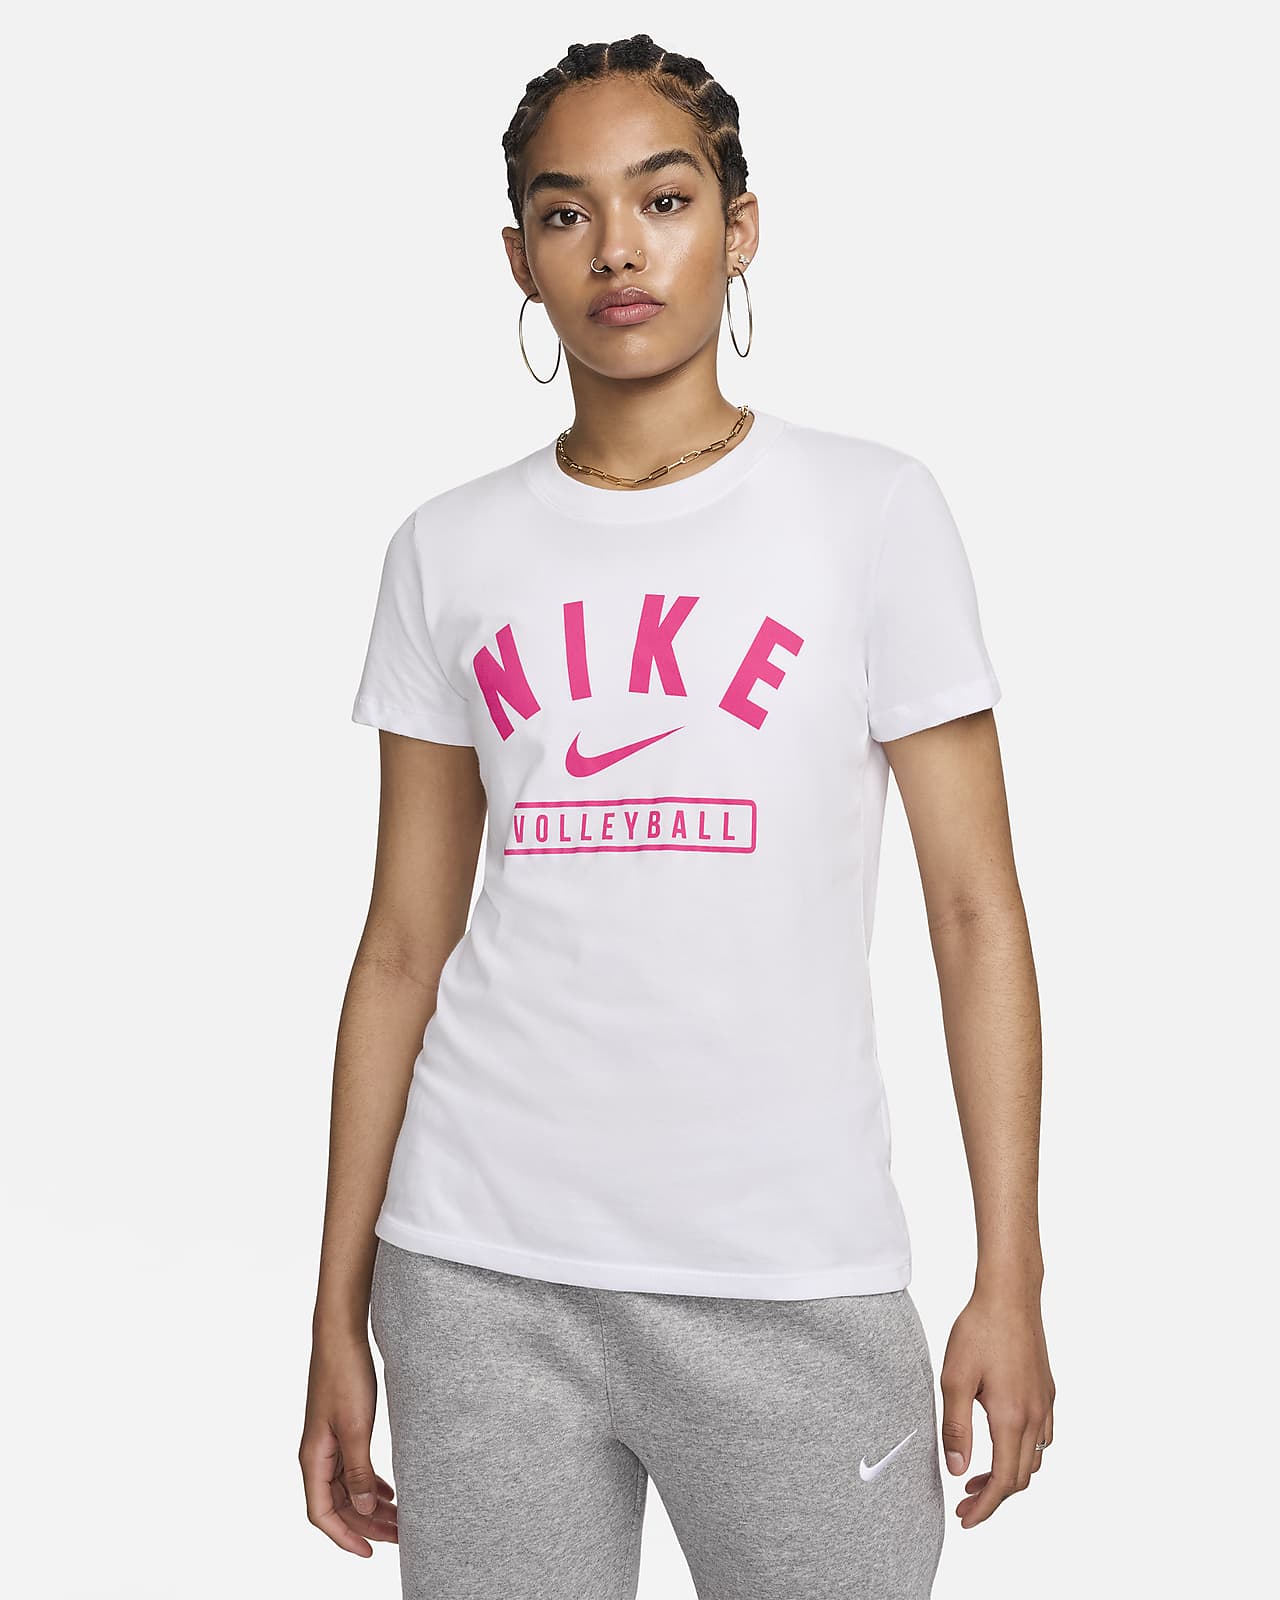 Nike Women's Volleyball T-Shirt